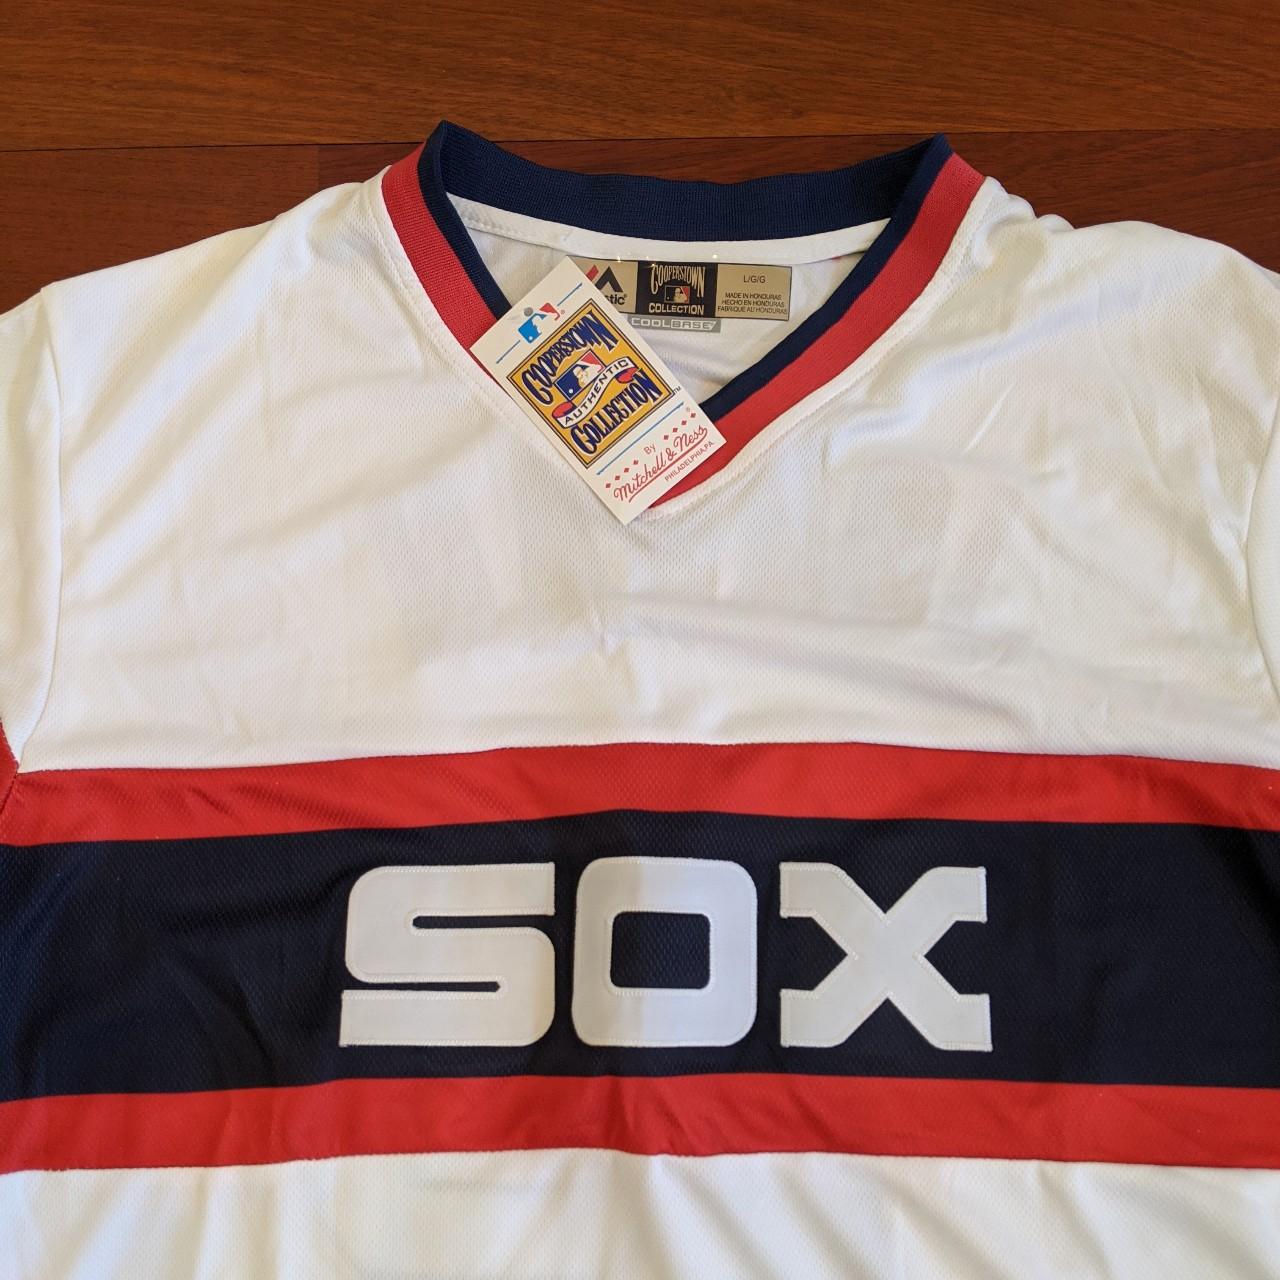 Vintage Nike Michael Jordan #45 White Sox Baseball T-Shirt  White sox  baseball, Baseball tshirts, Chicago white sox baseball